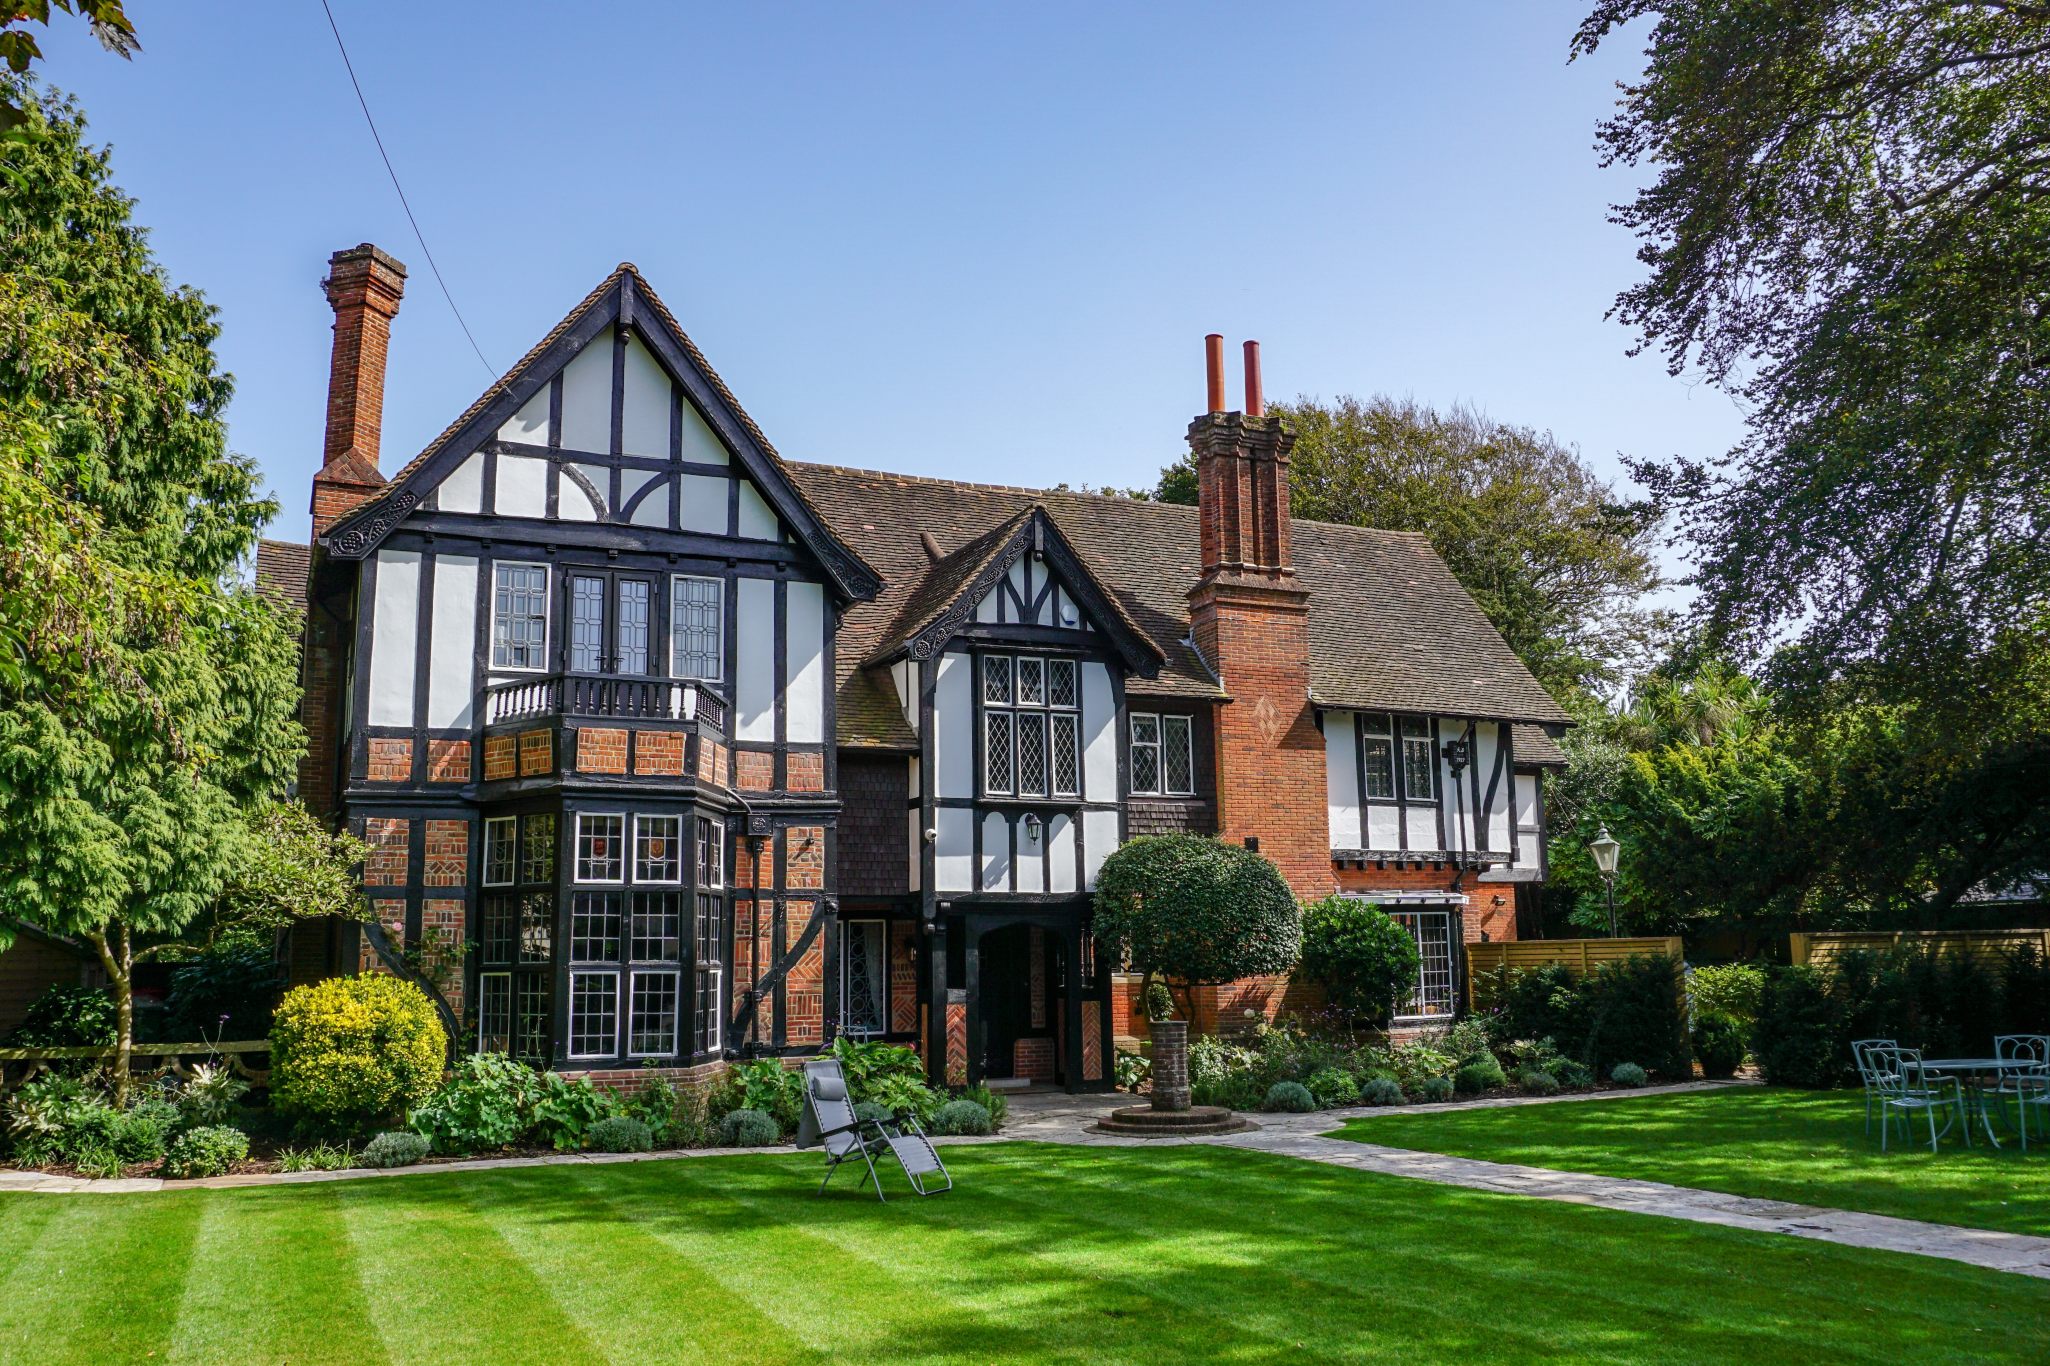 Tudor home in England